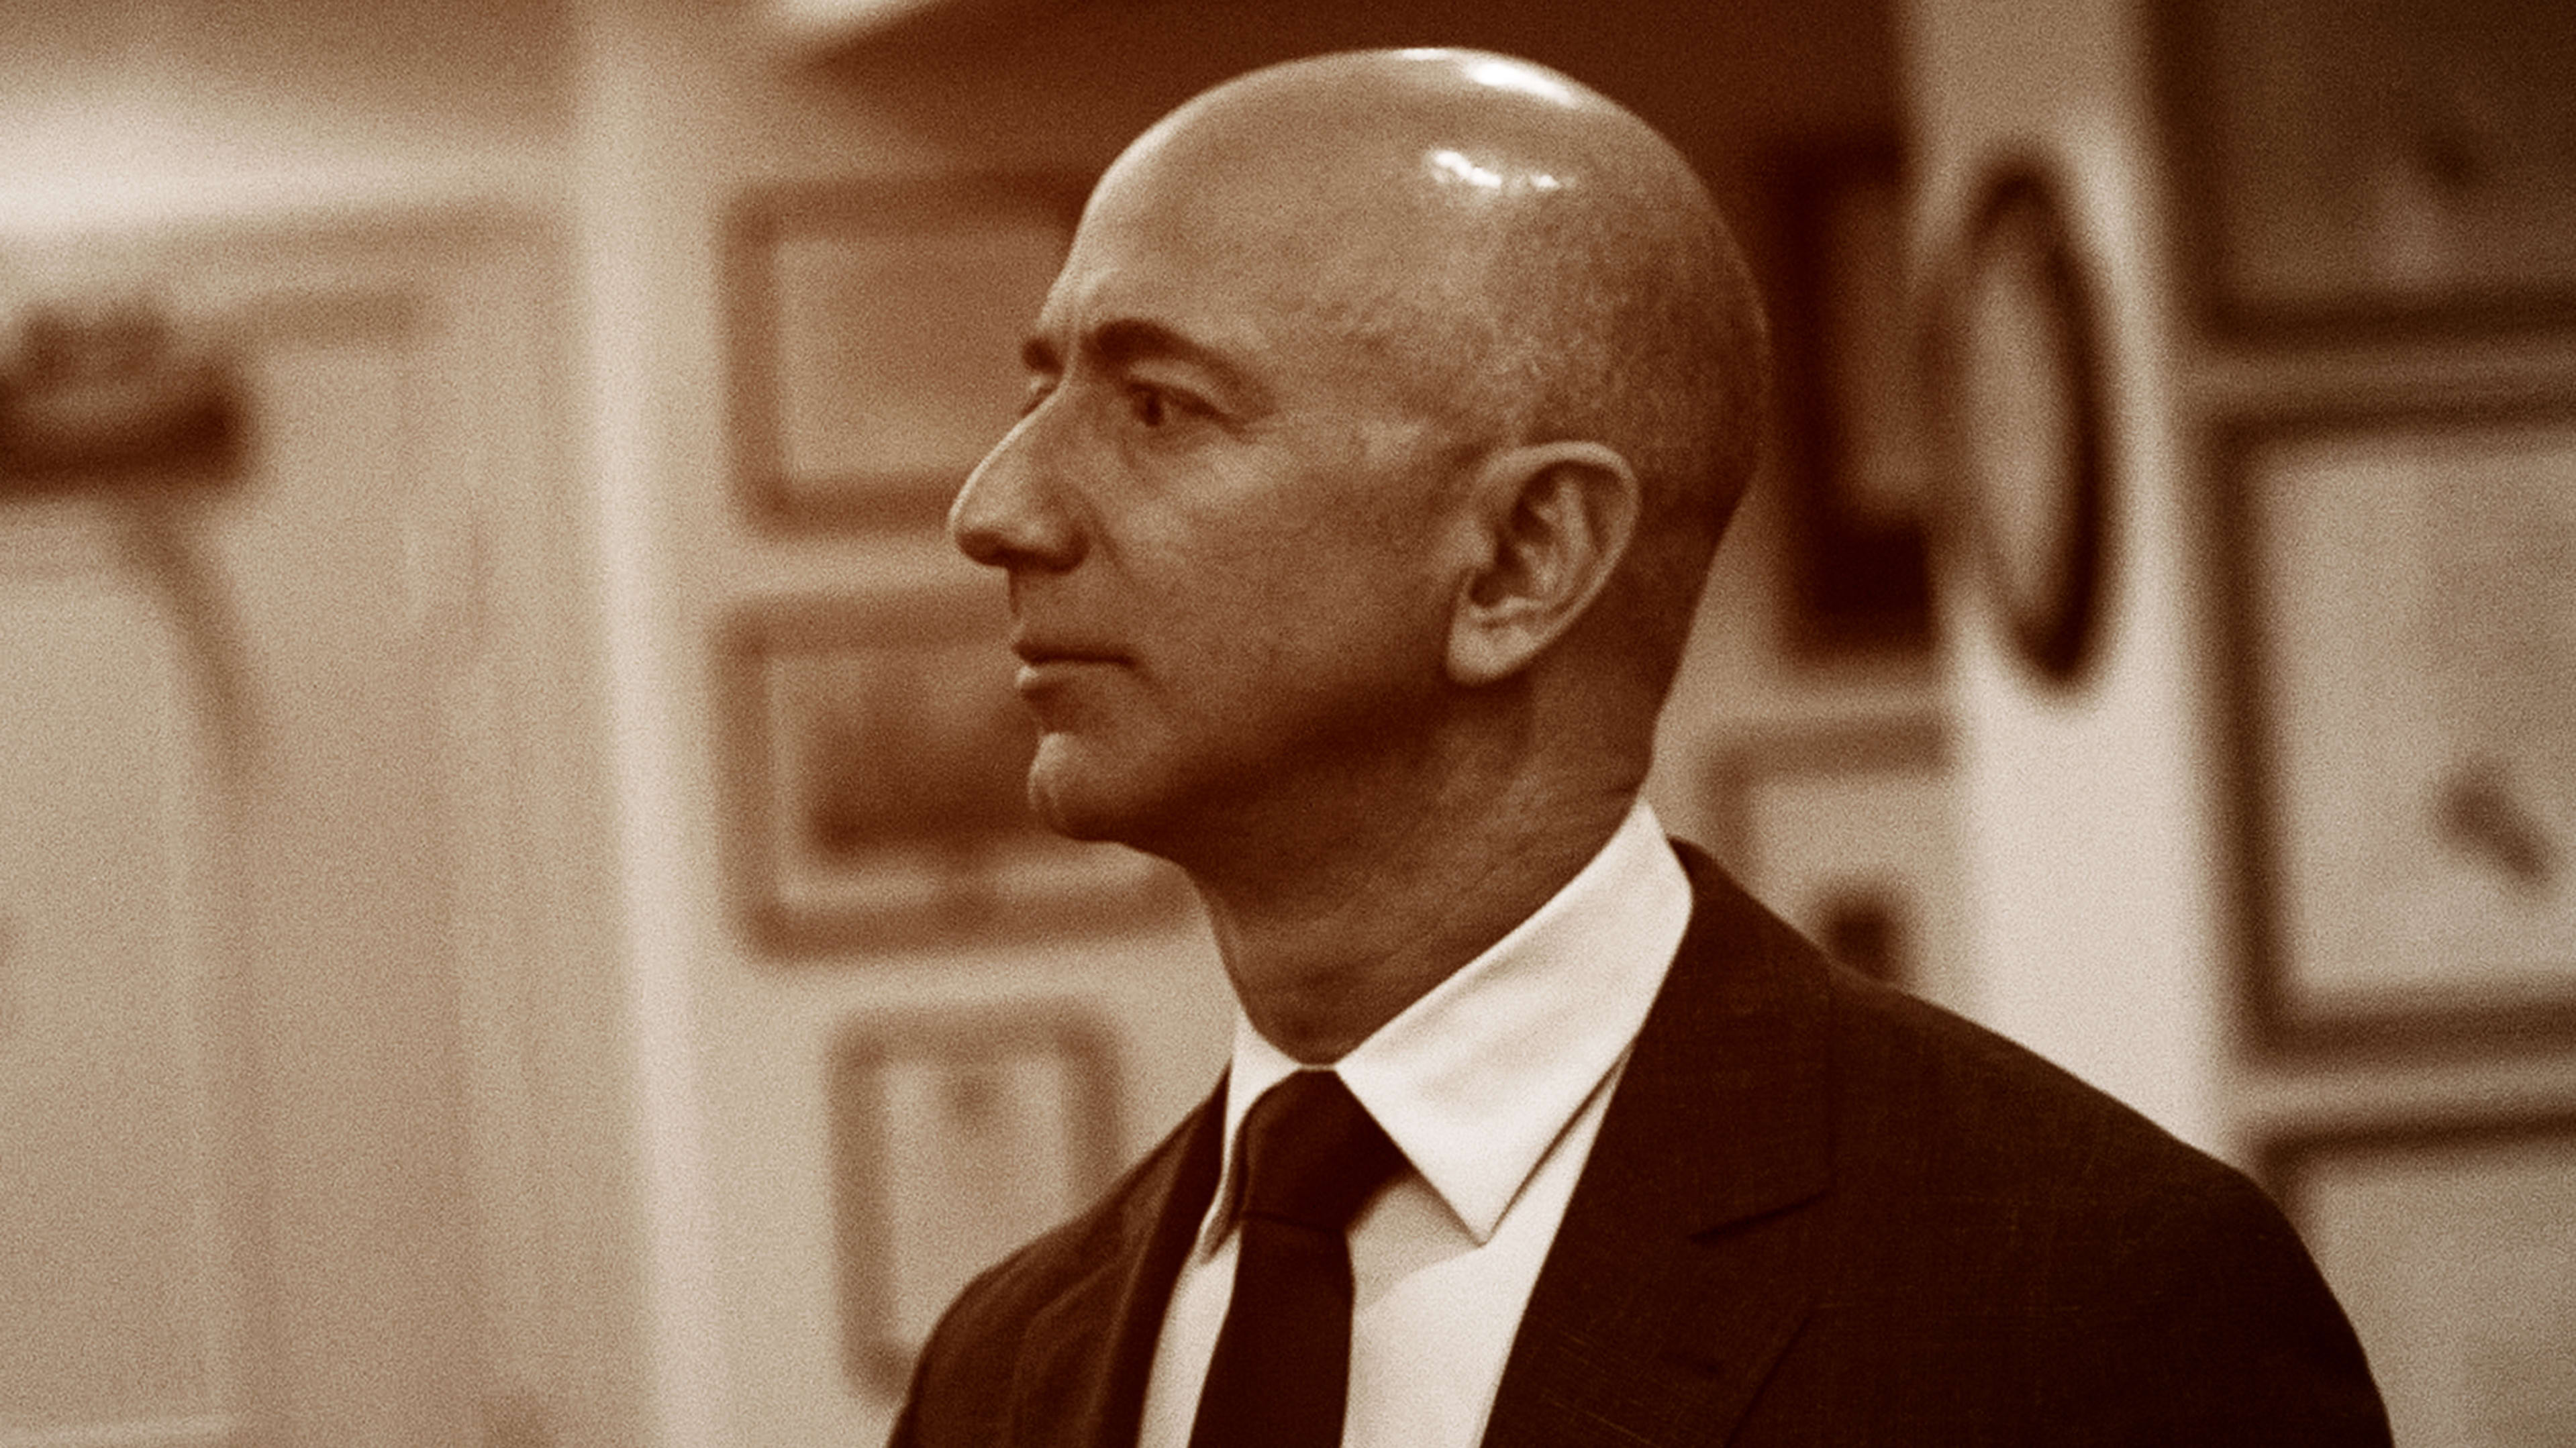 Jeff Bezos touts Alexa adoption, AWS, and wage hikes in shareholder letter